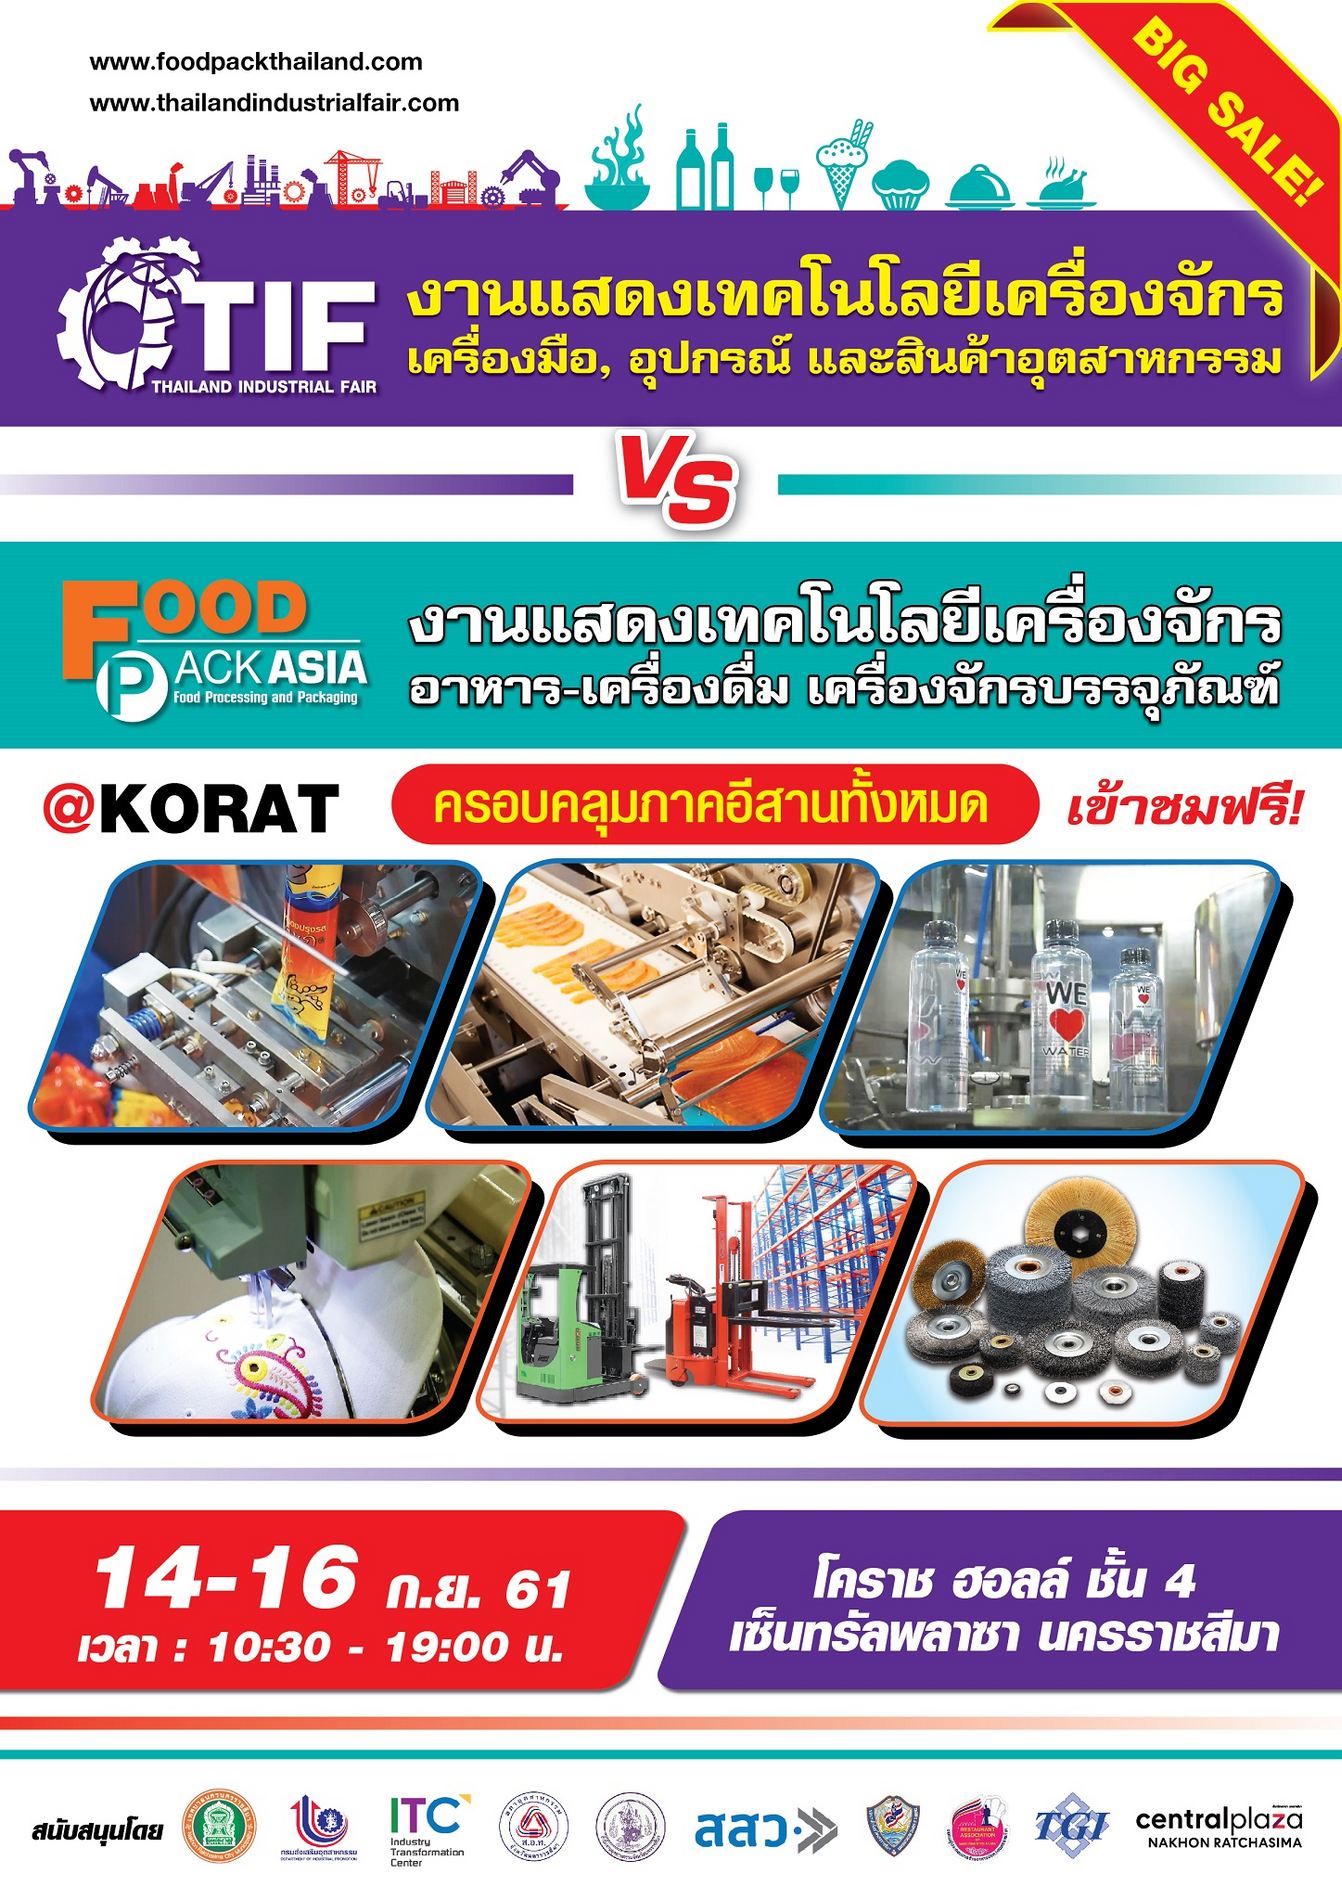 Food Pack Asia & Thailand Industrial 2018@ Korat